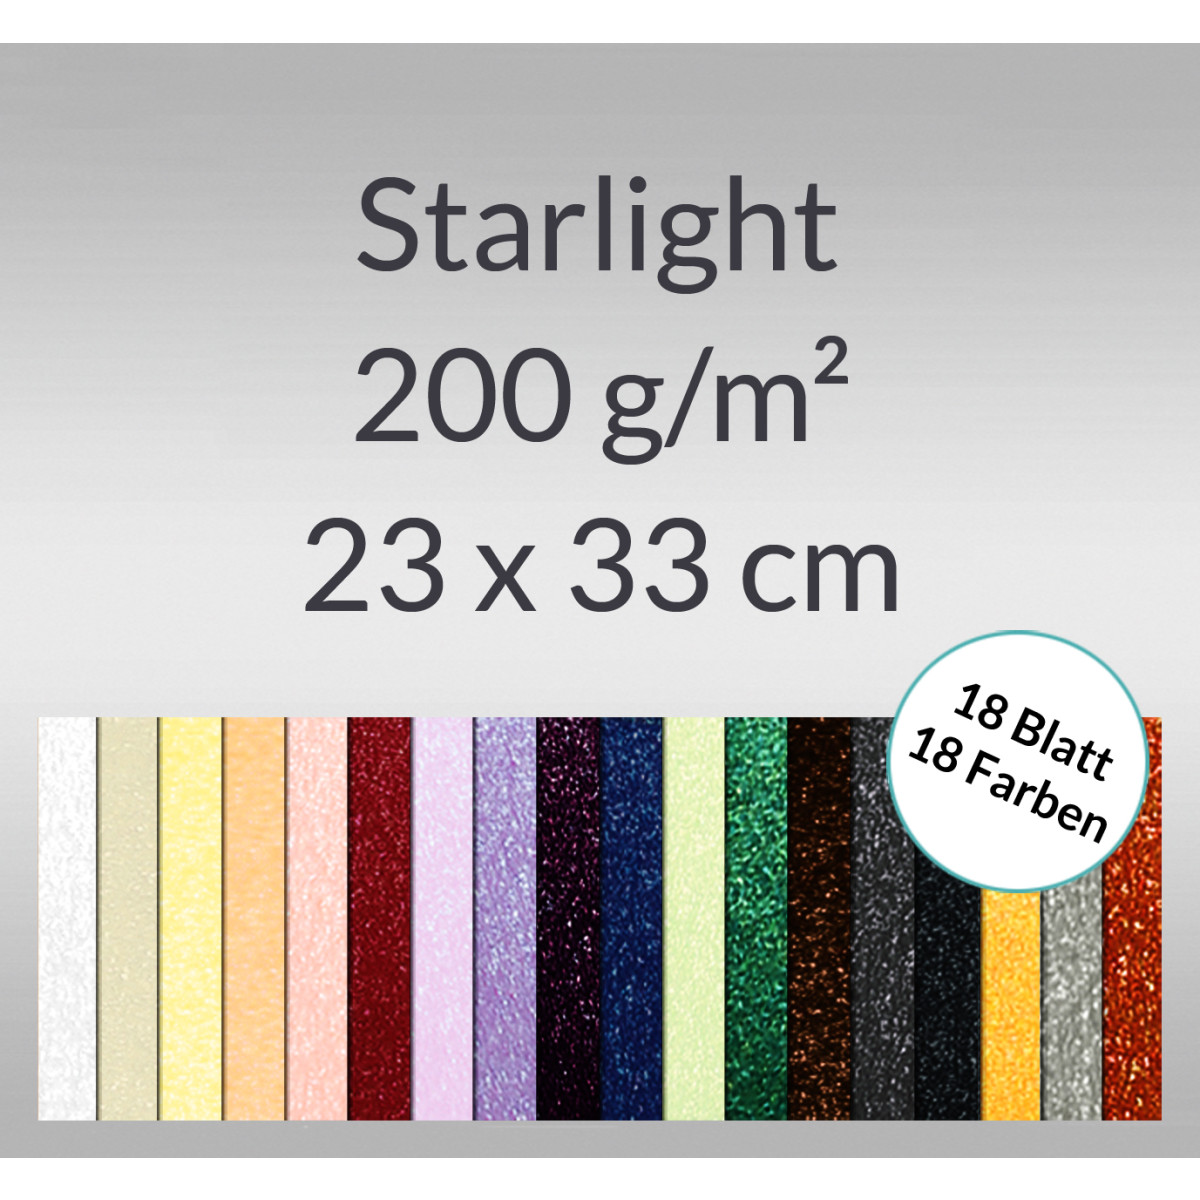 Starlight 200 g/qm 23 x 33 cm - 18 Blatt sortiert